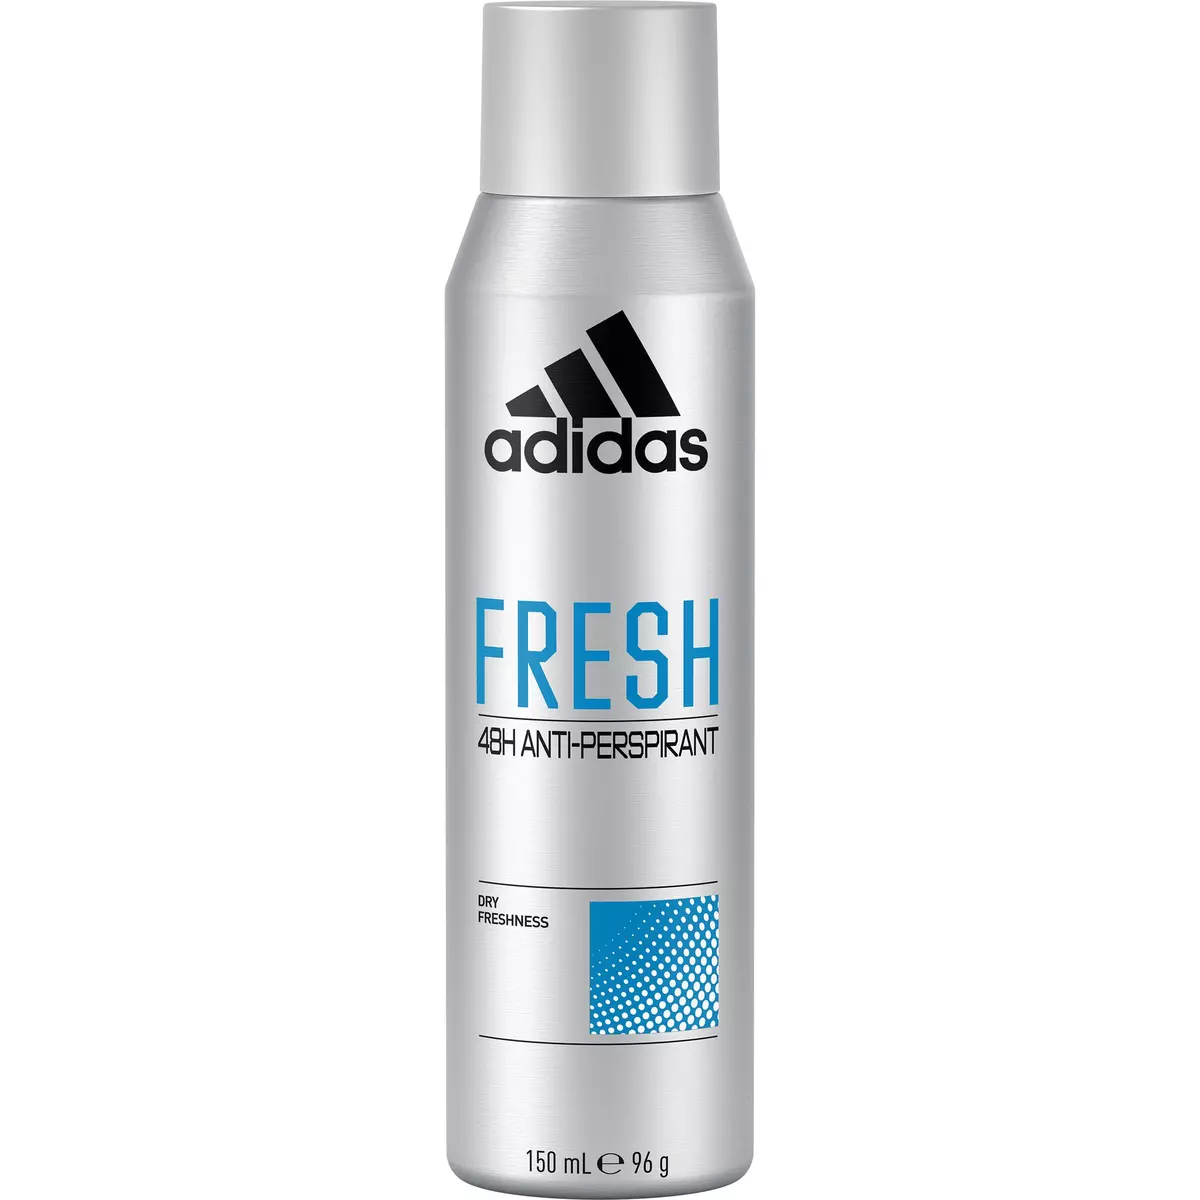 ADIDAS Déodorant fresh anti-perspirant 150ml